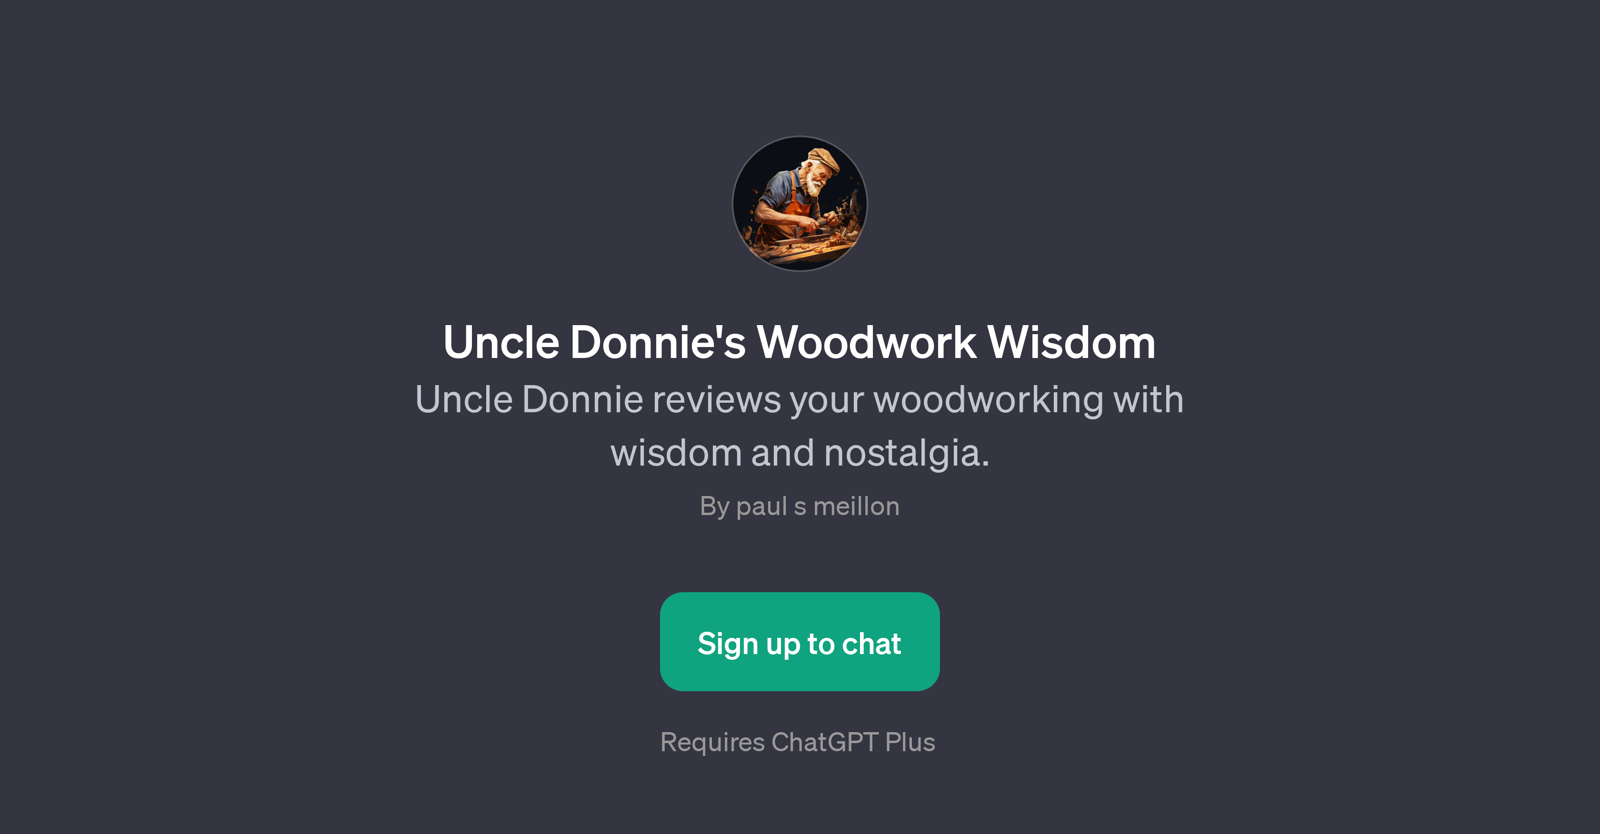 Uncle Donnie's Woodwork Wisdom website